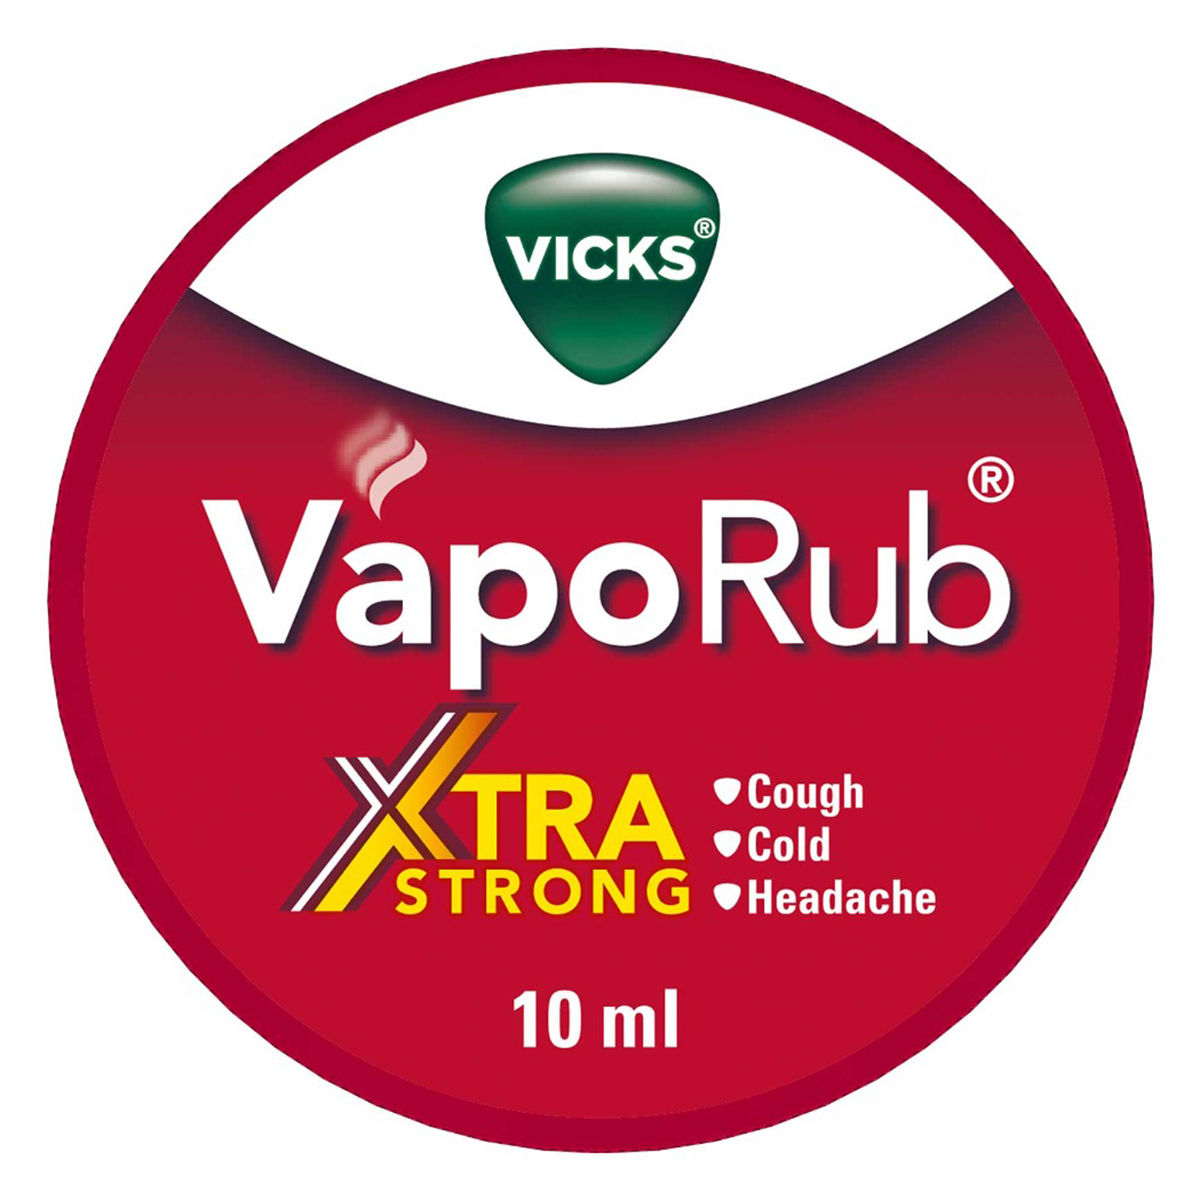 Vicks Vaporub Xtra Strong, 10 ml Price, Uses, Side Effects, Composition -  Apollo Pharmacy